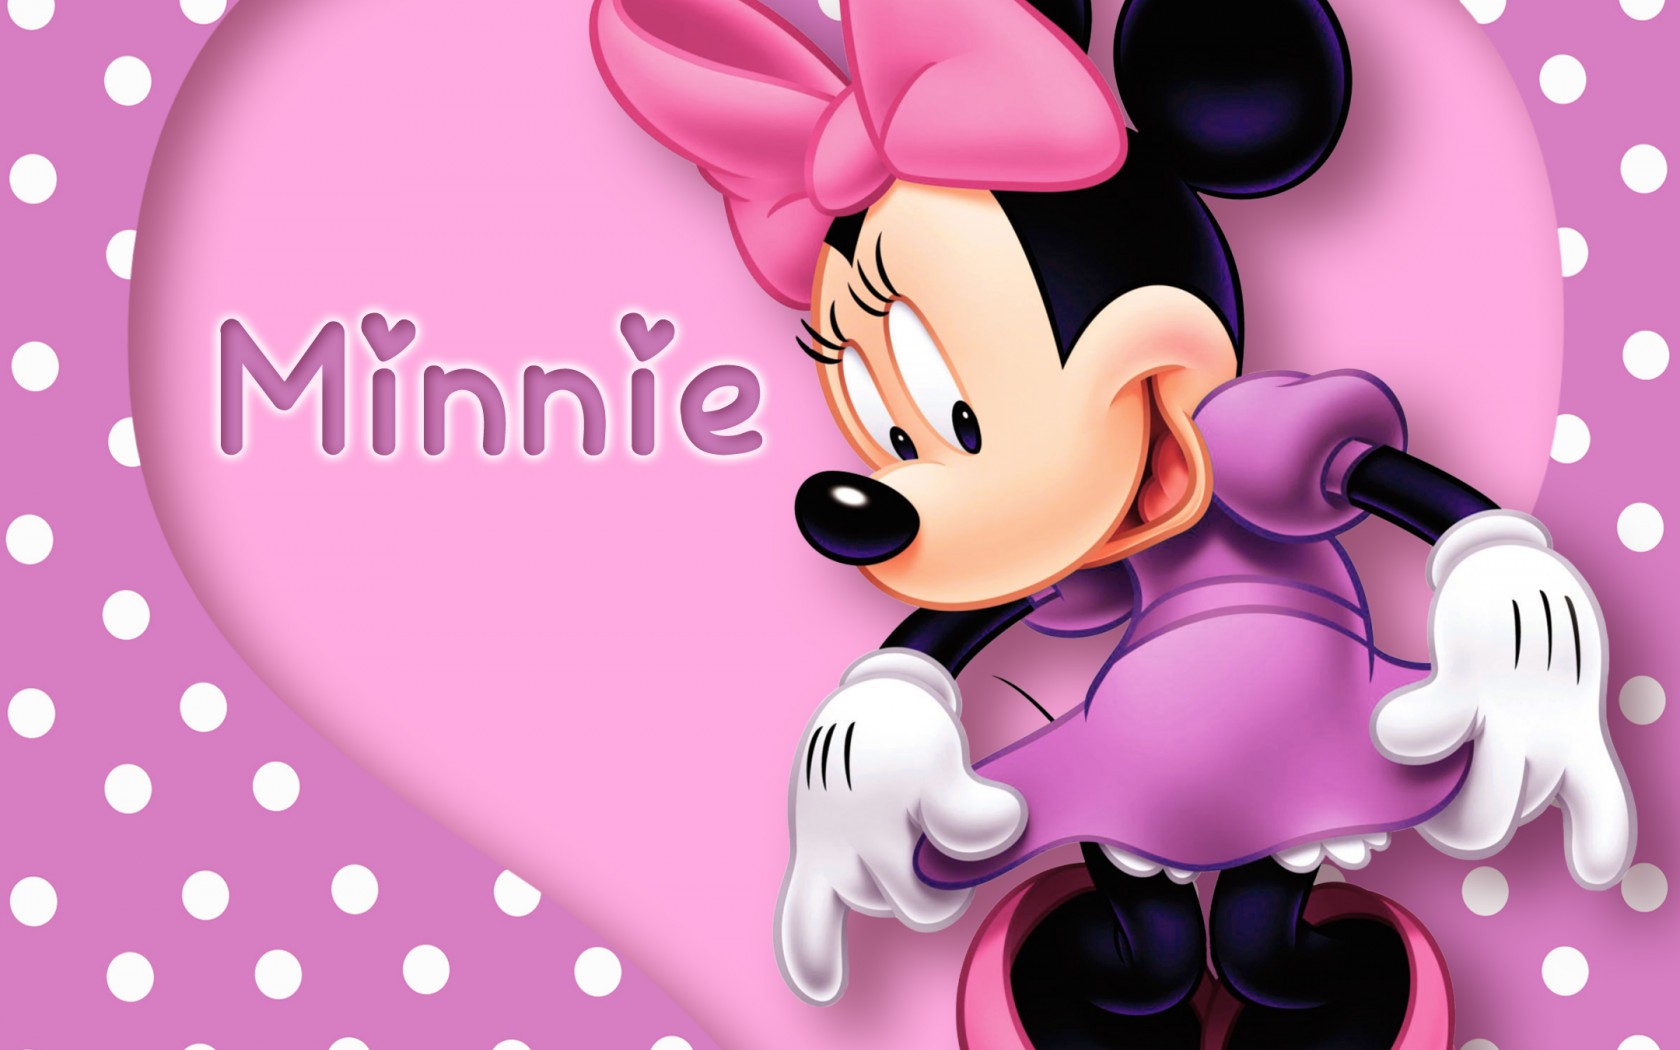 Free Download Minnie Mouse Wallpaper Minnie Mouse Wallpaper Minnie